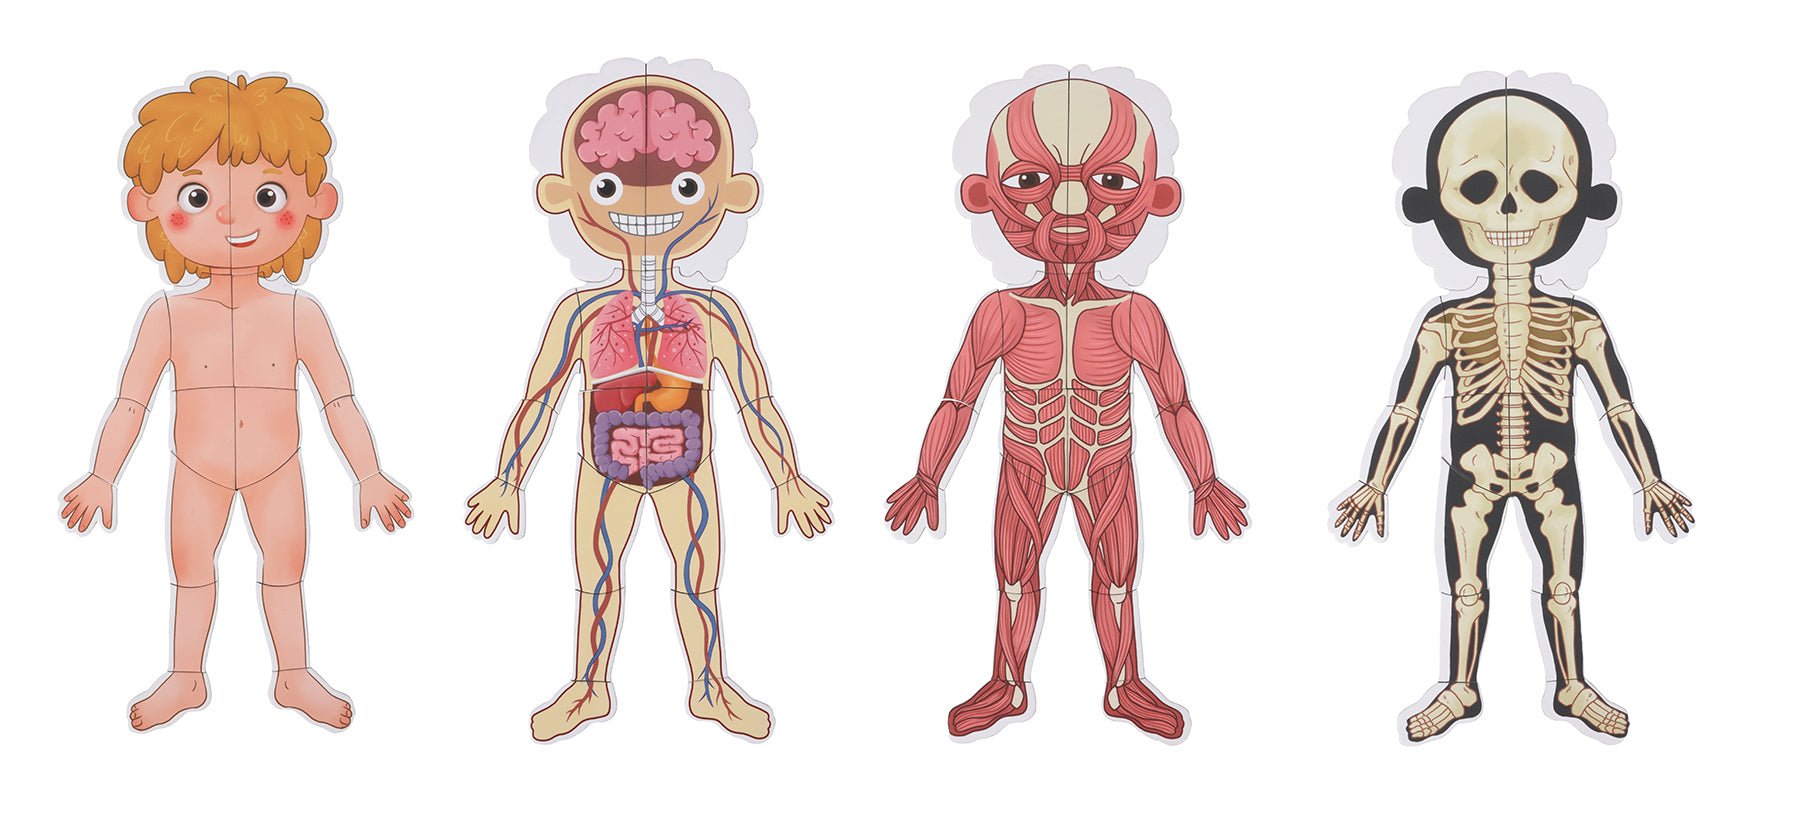 Fun Visual Human Anatomy for Children